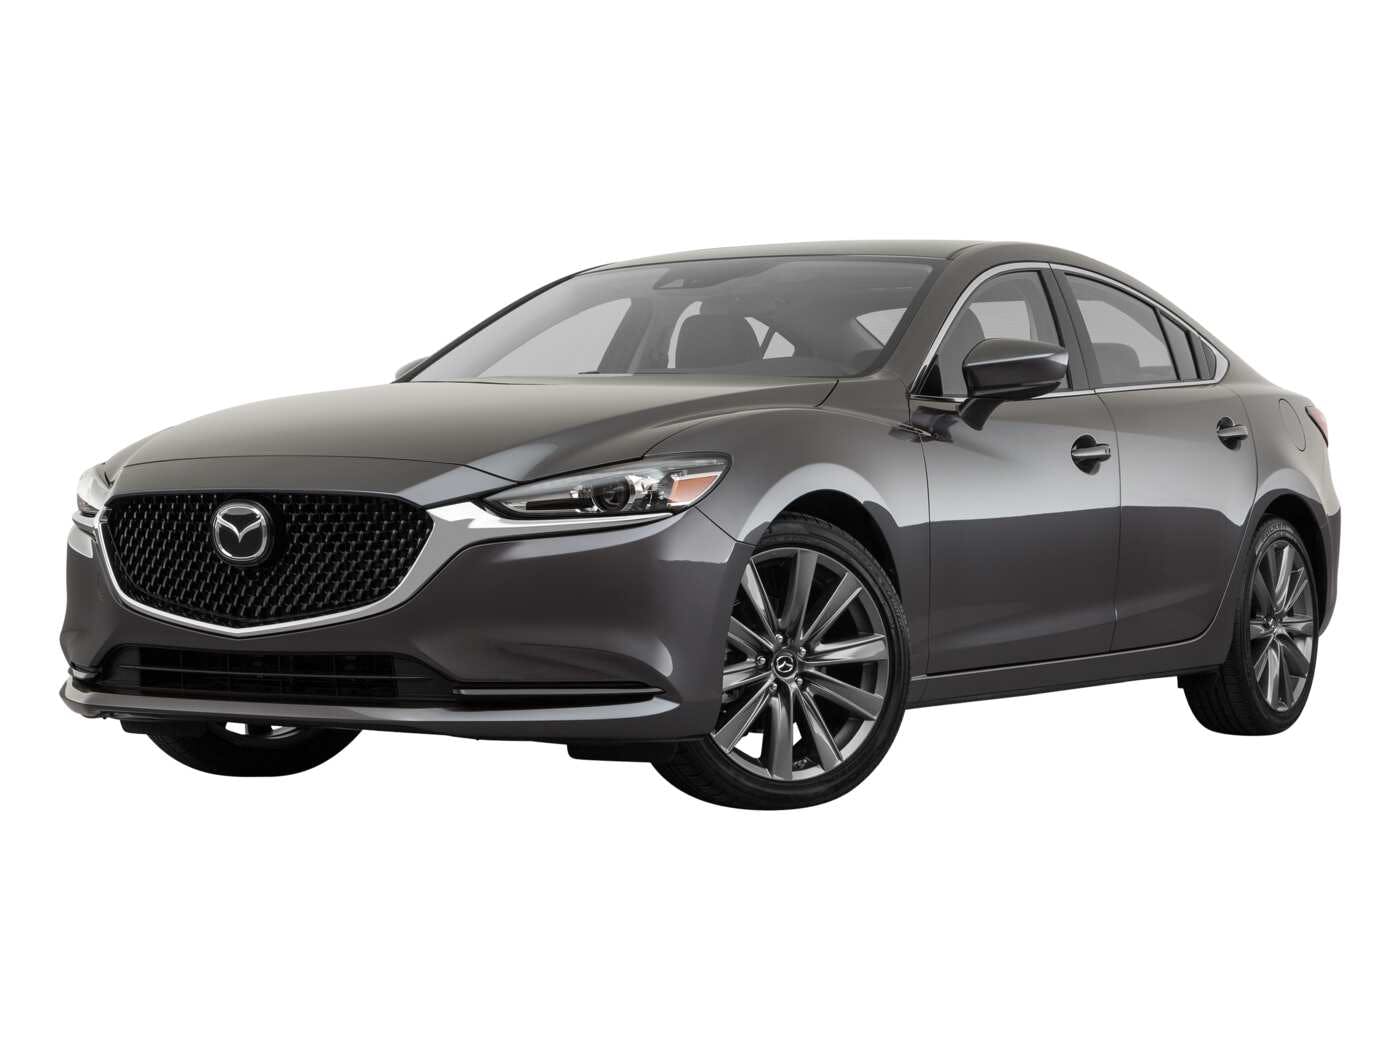 2021 Mazda Mazda6 Review | Pricing, Trims & Photos - TrueCar